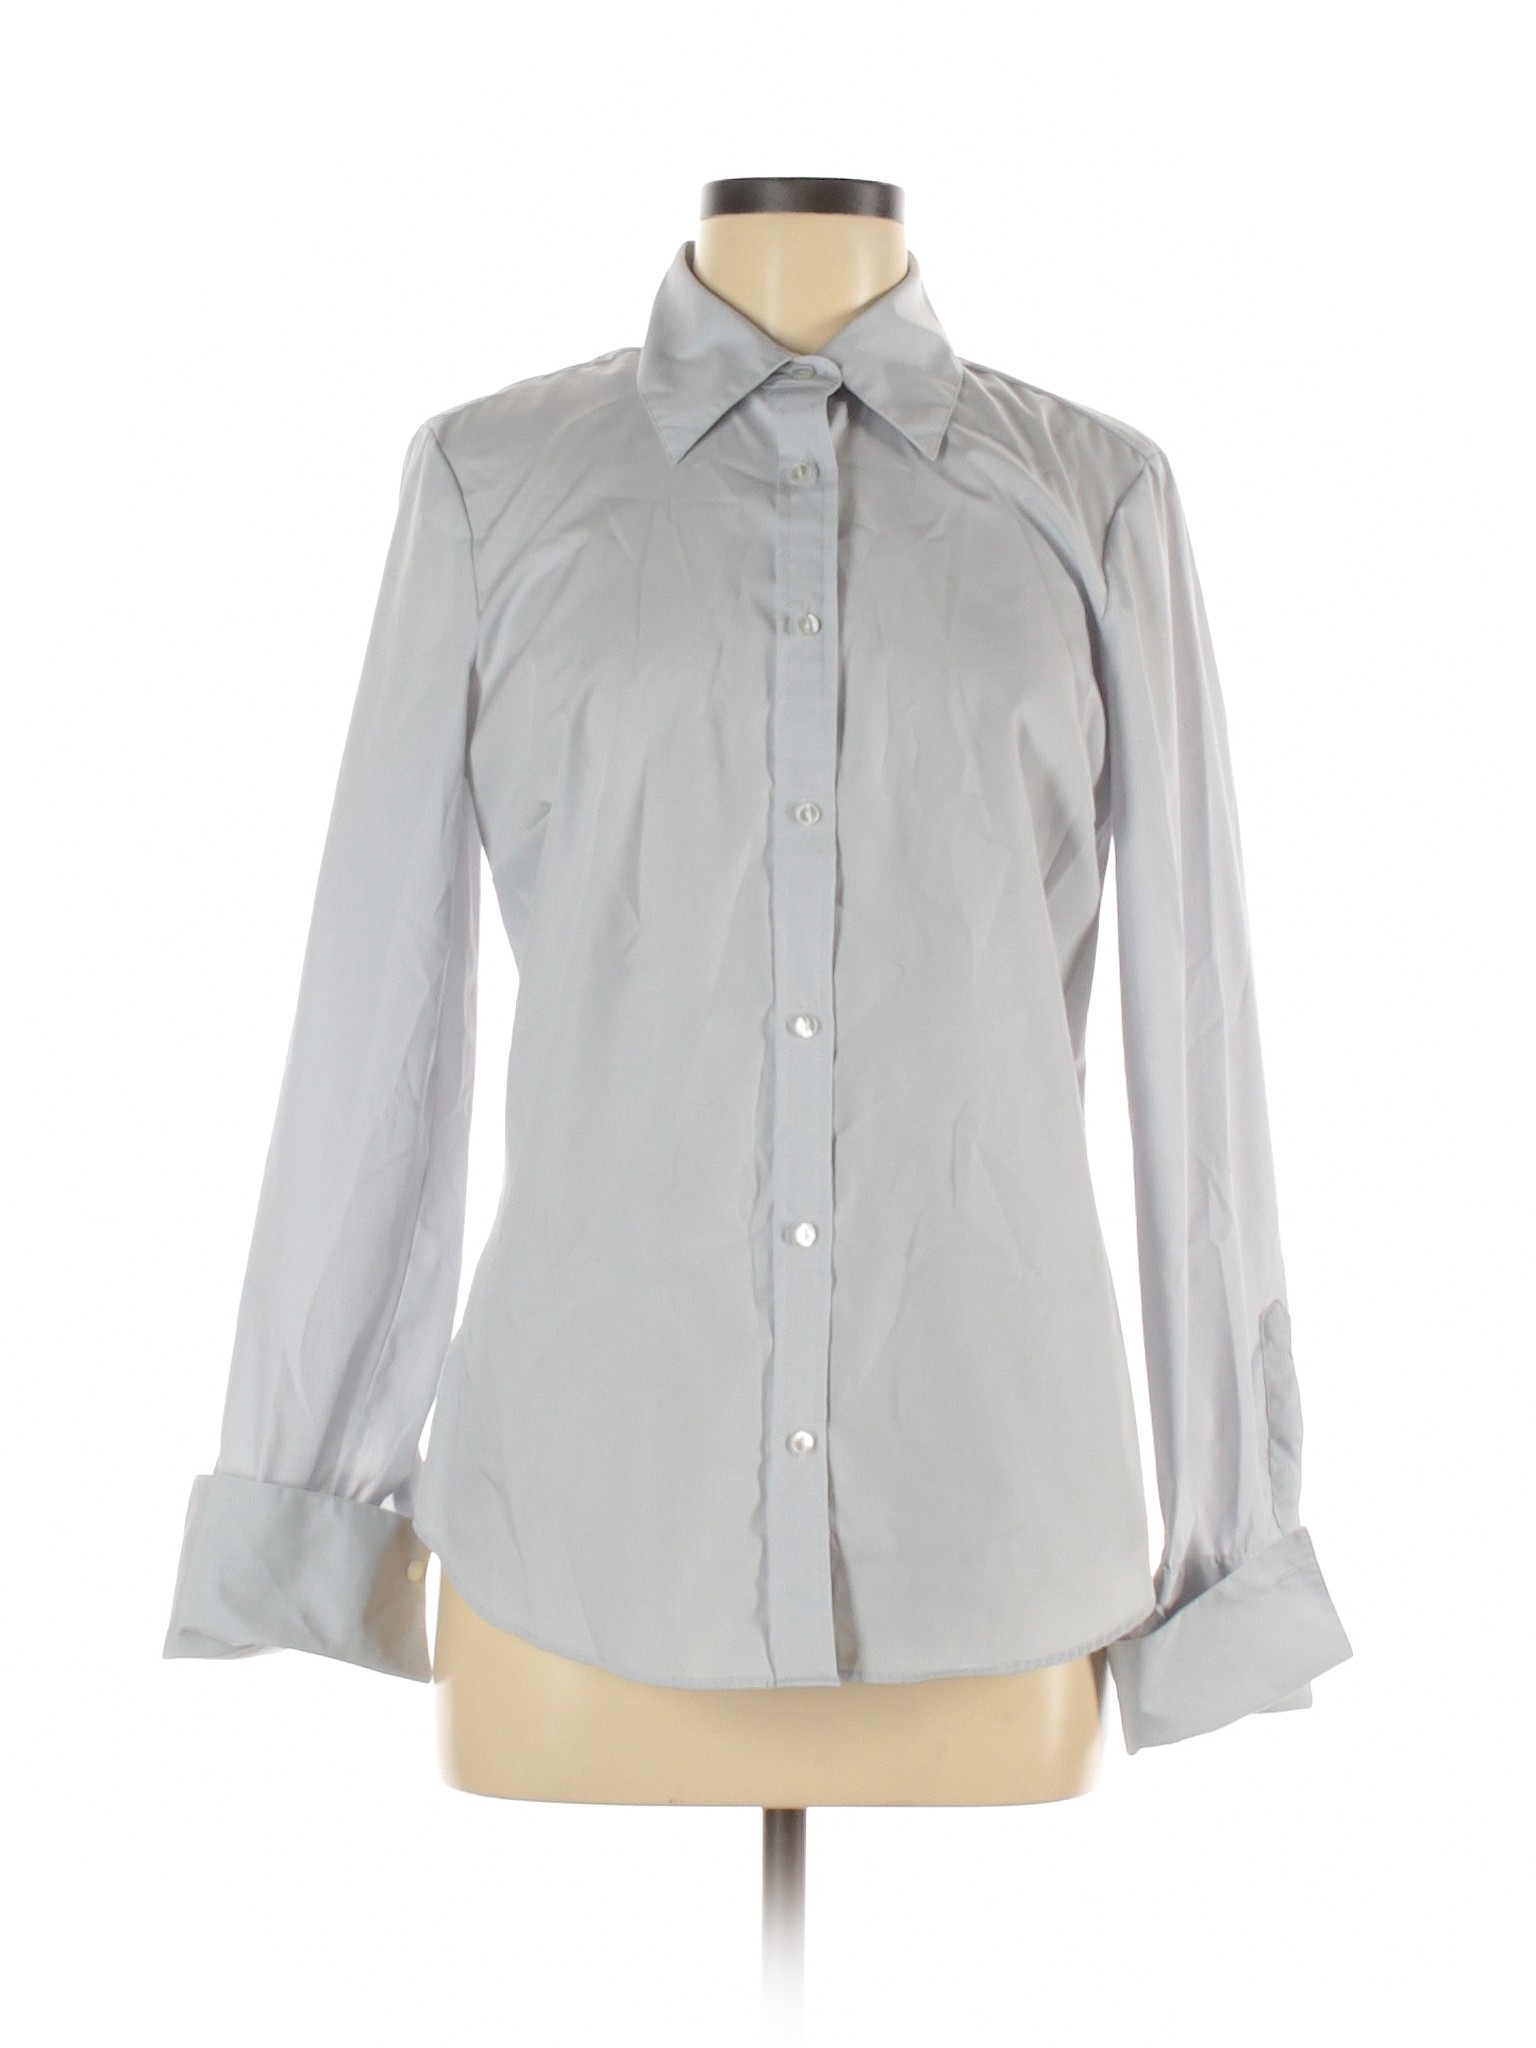 IZOD Women Gray Long Sleeve Button-Down Shirt M | eBay